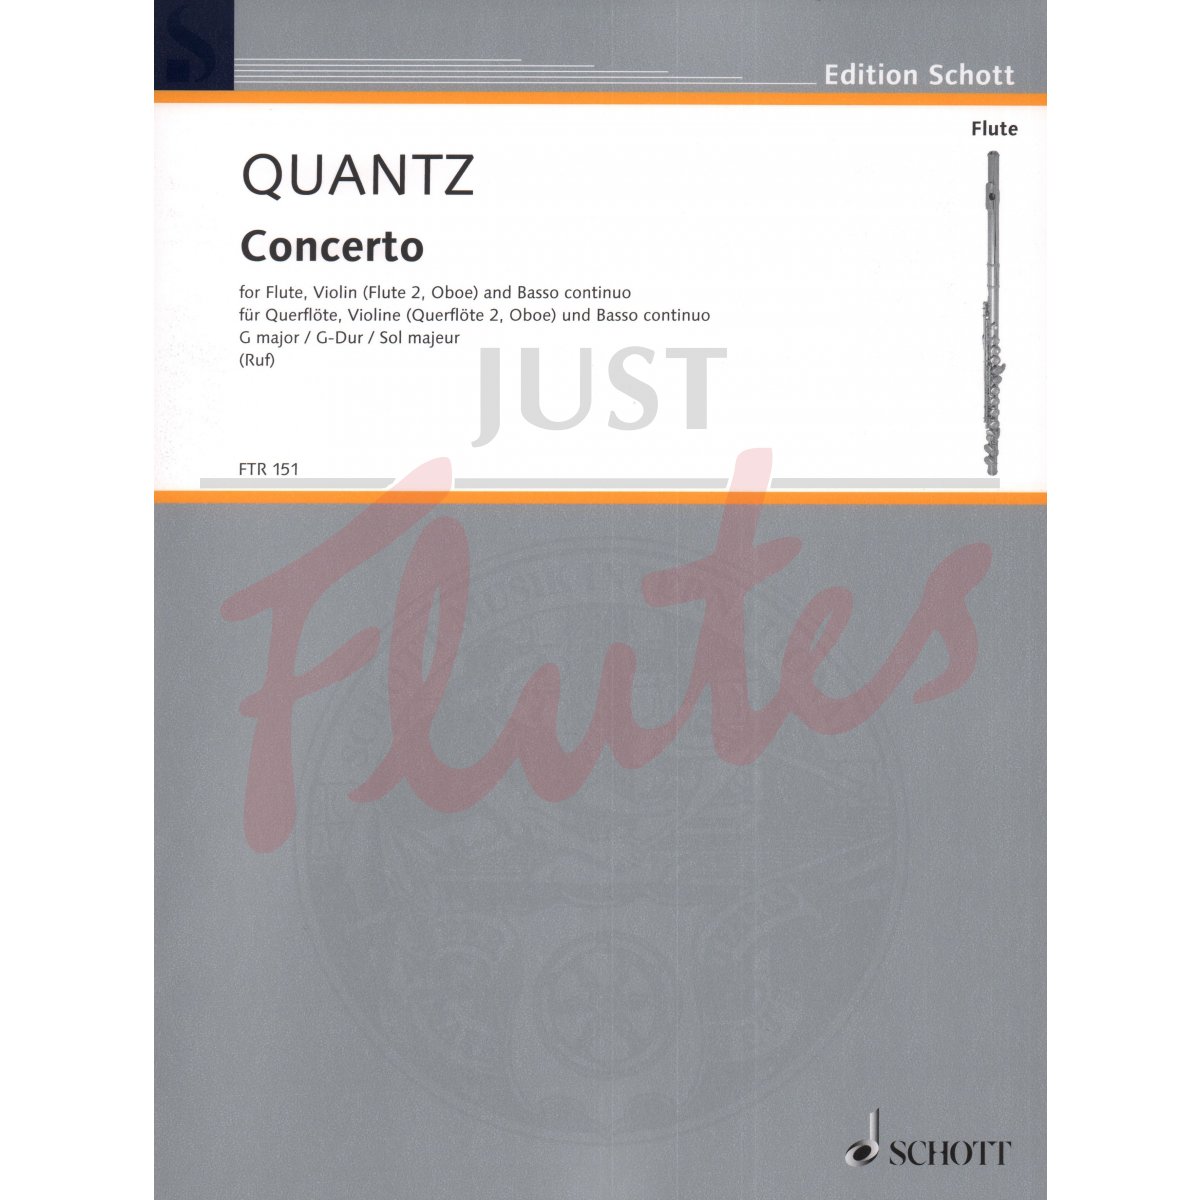 Concerto in G major for Flute, Violin and Piano